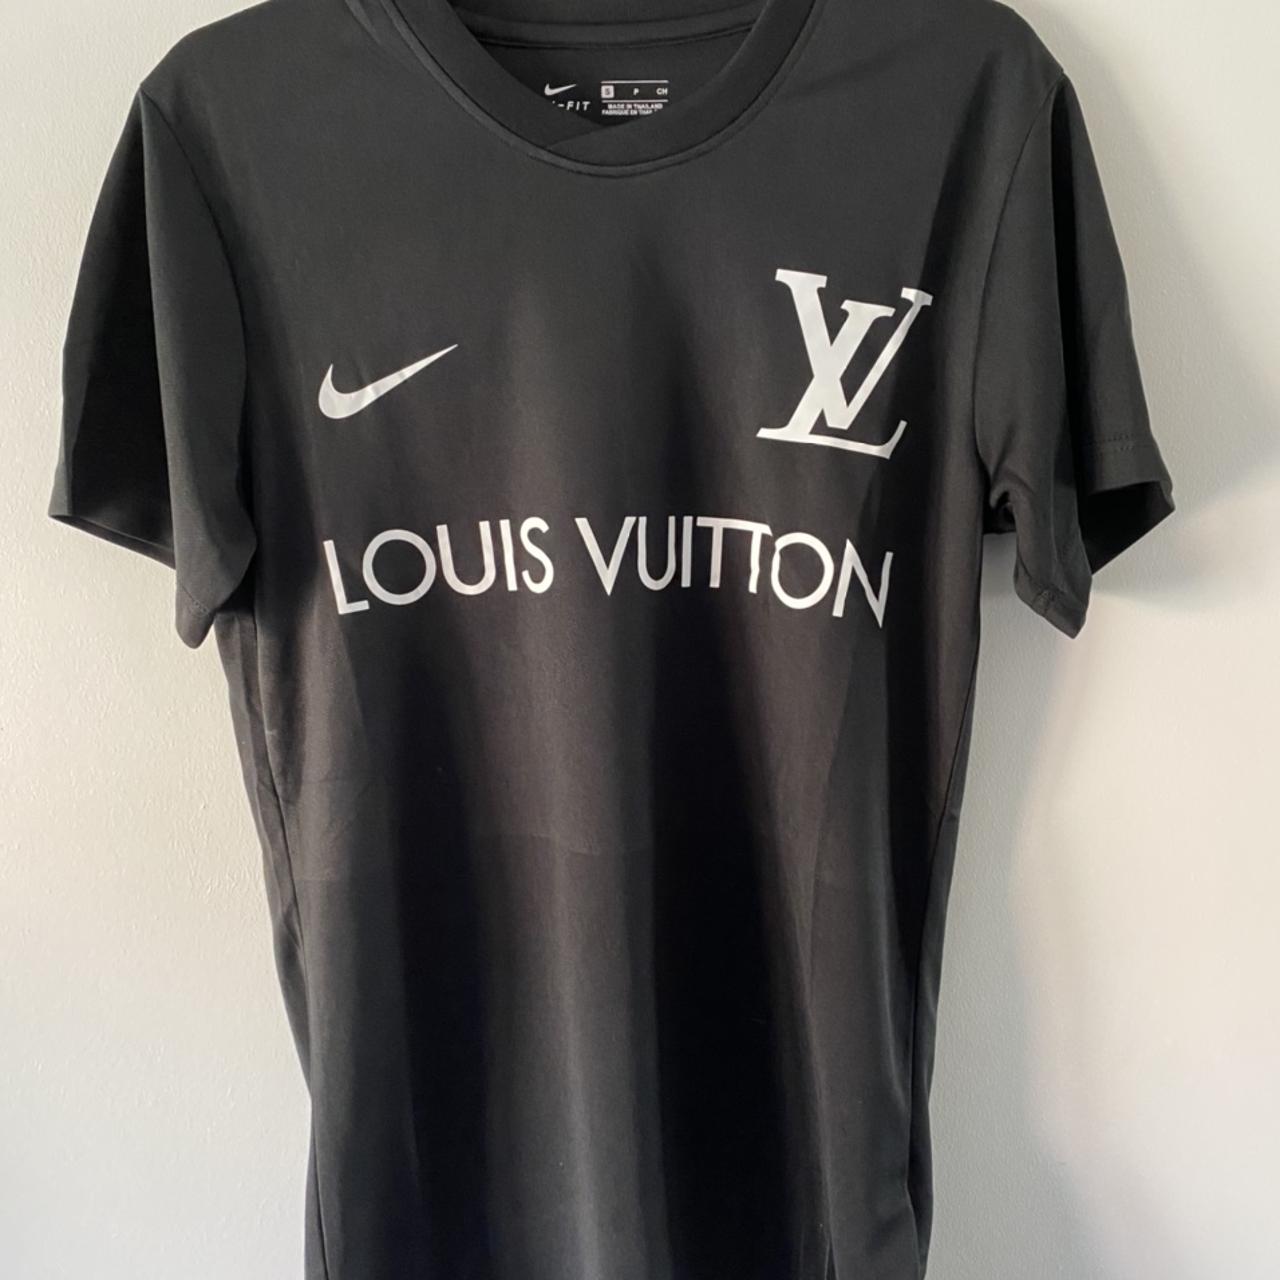 Louis Vuitton V neck t shirt. White and dark green - Depop